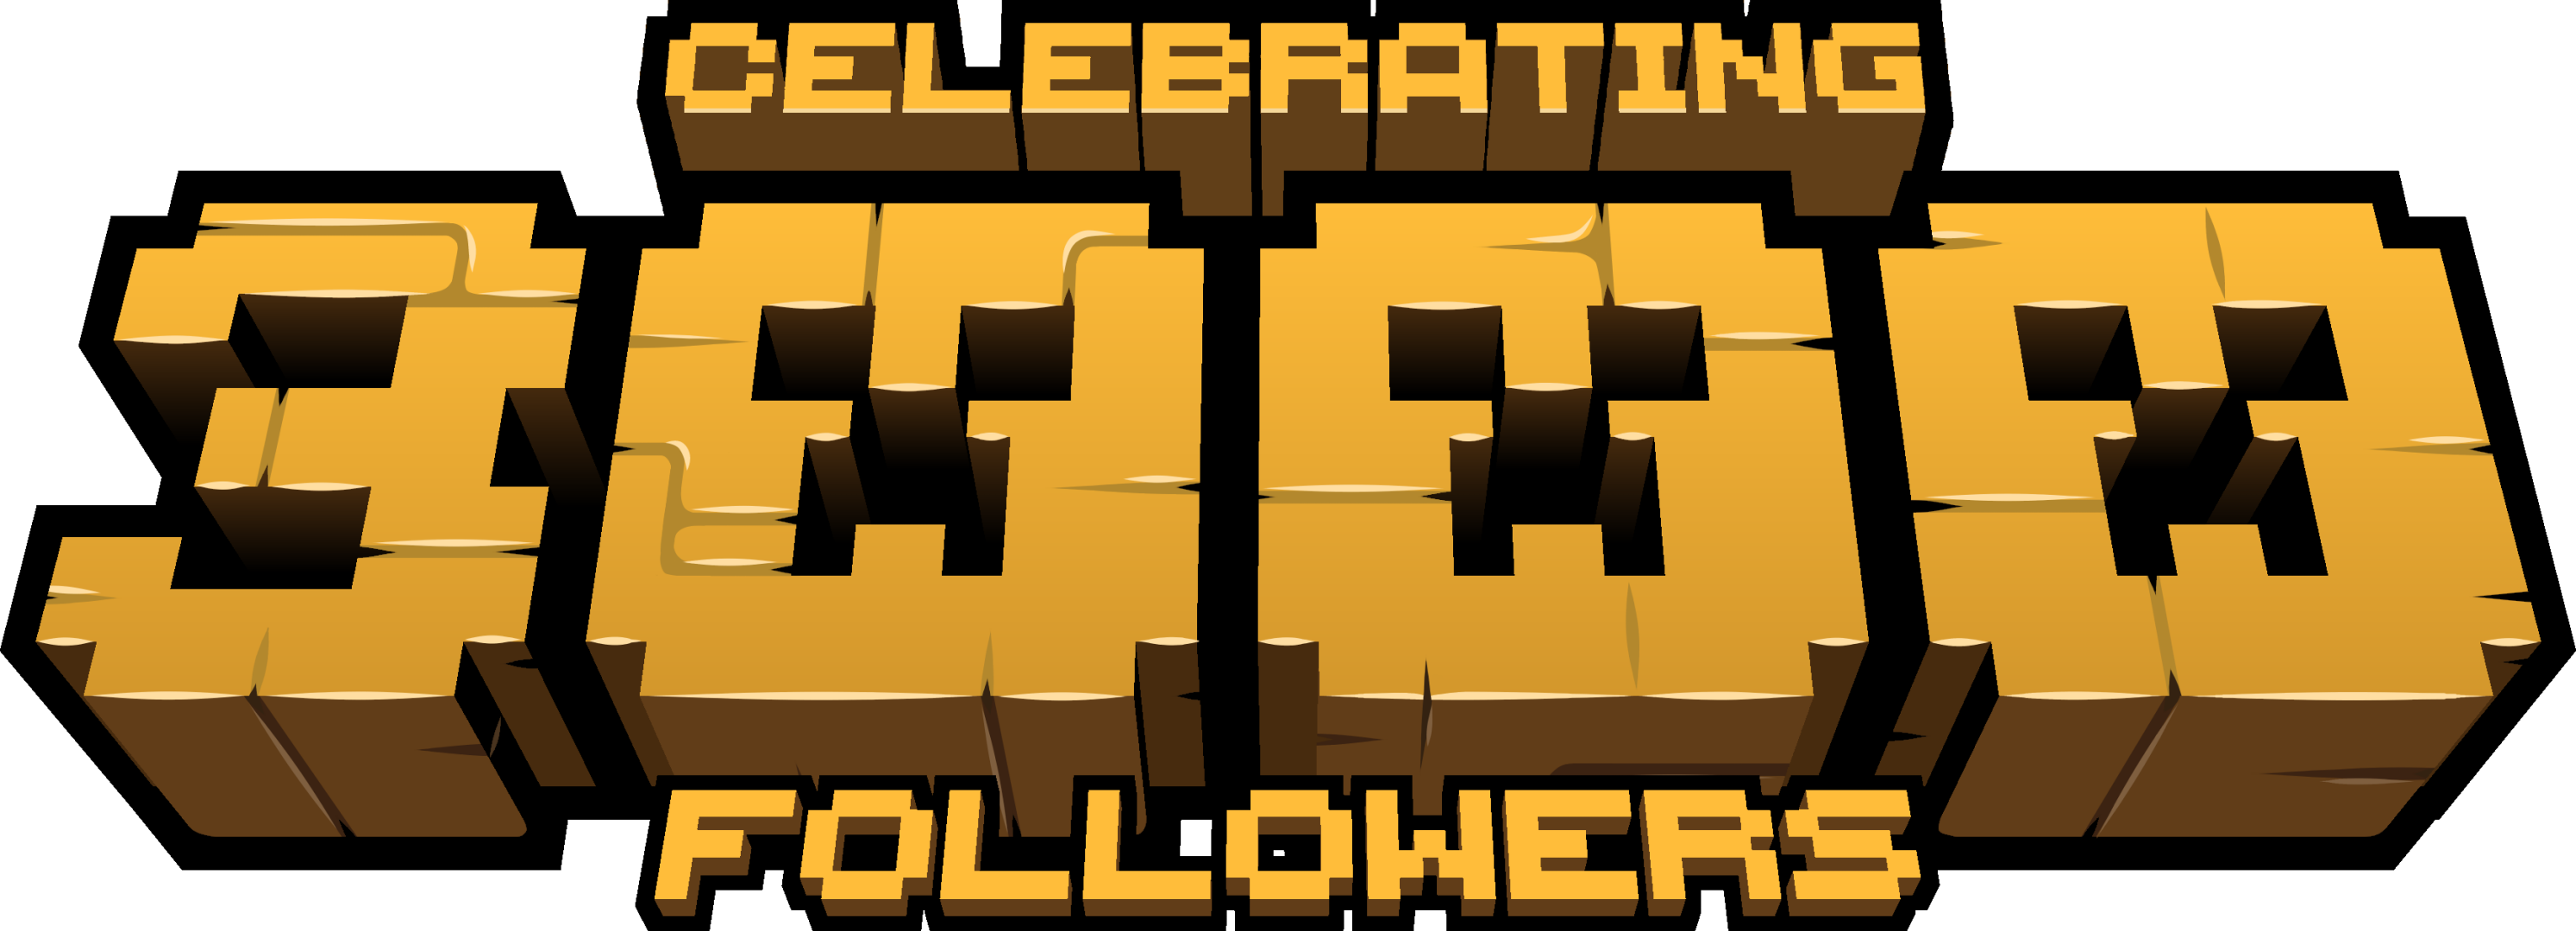 3000 followers logo